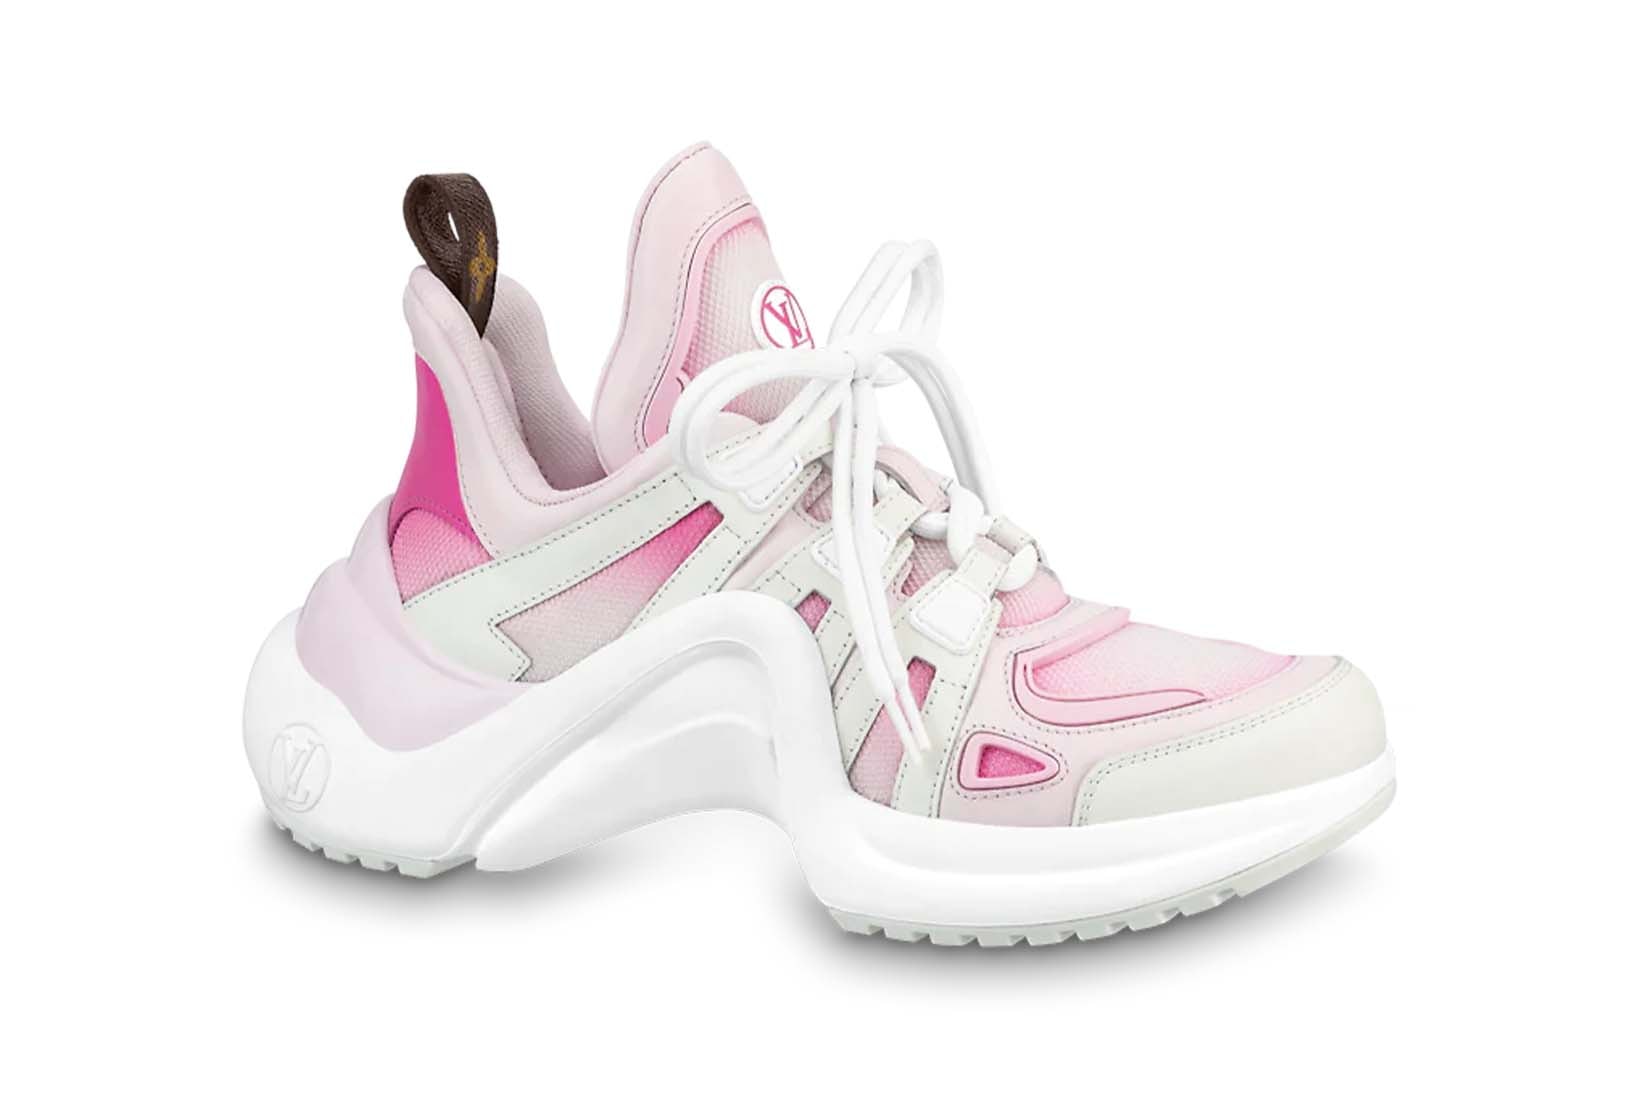 Louis Vuitton Archlight Sneaker Light Pink Price